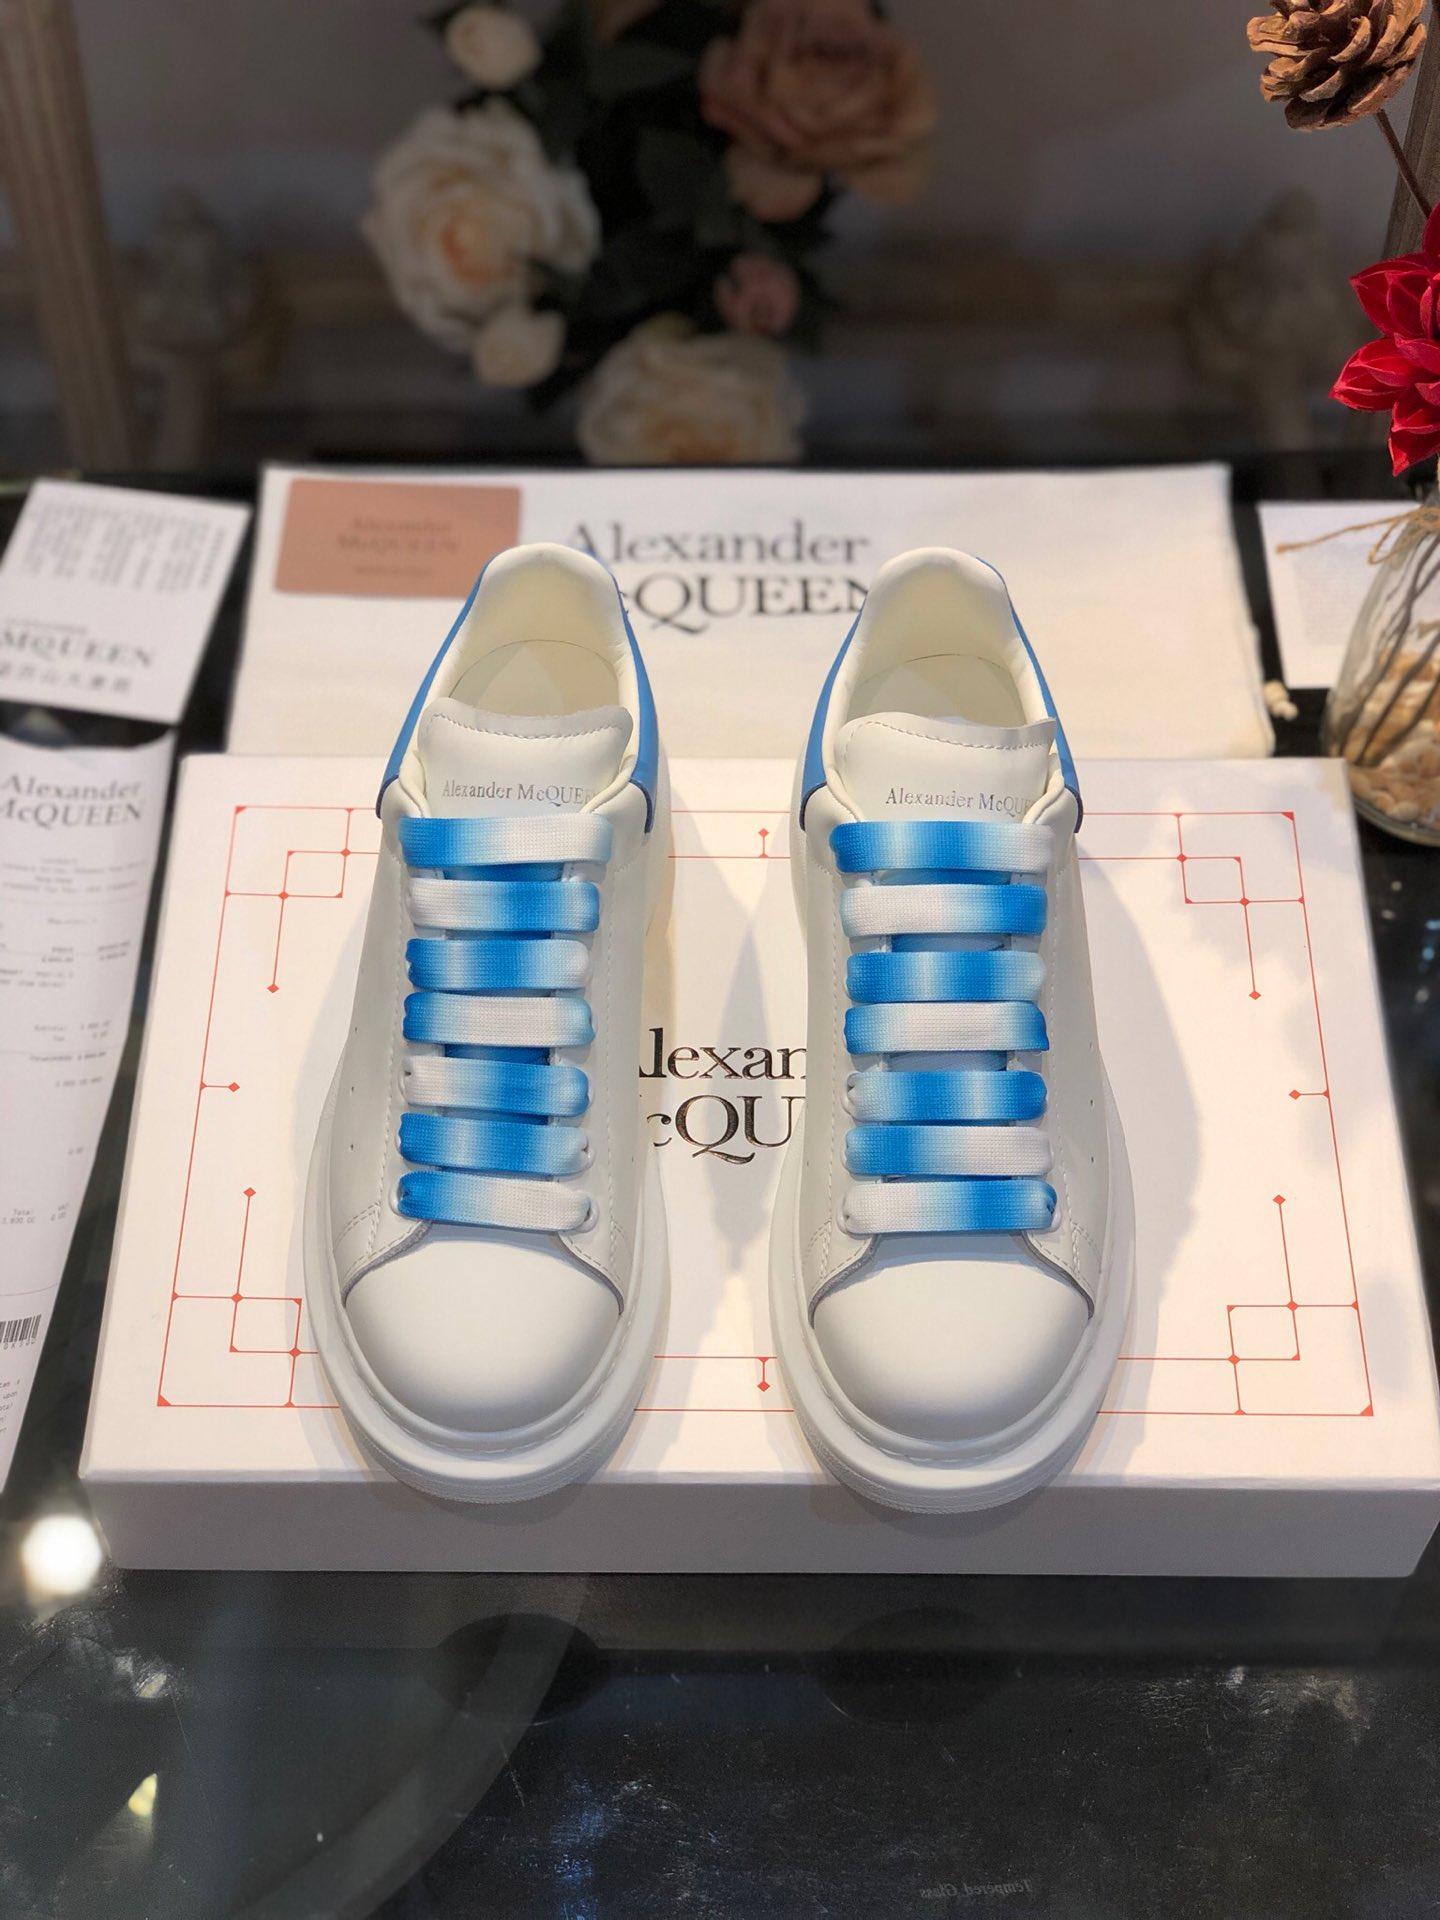 Alexander McQueen Fahion Sneaker White and sky blue heel MS100049